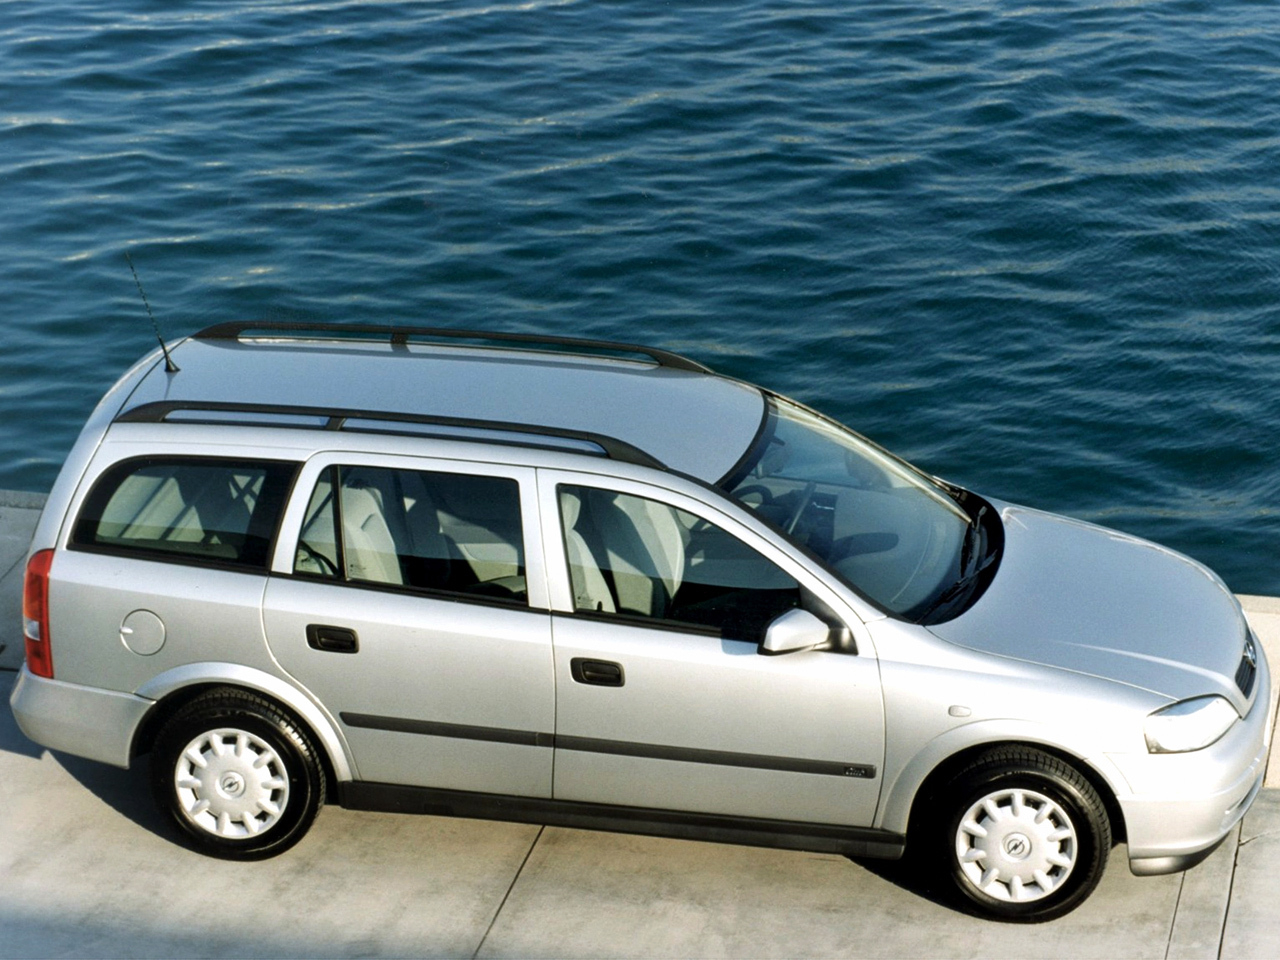 Джи караван. Opel Astra g Caravan 1998. Opel Astra Caravan 1998. Opel Astra g Caravan 2004. Opel Astra g 1998 универсал.